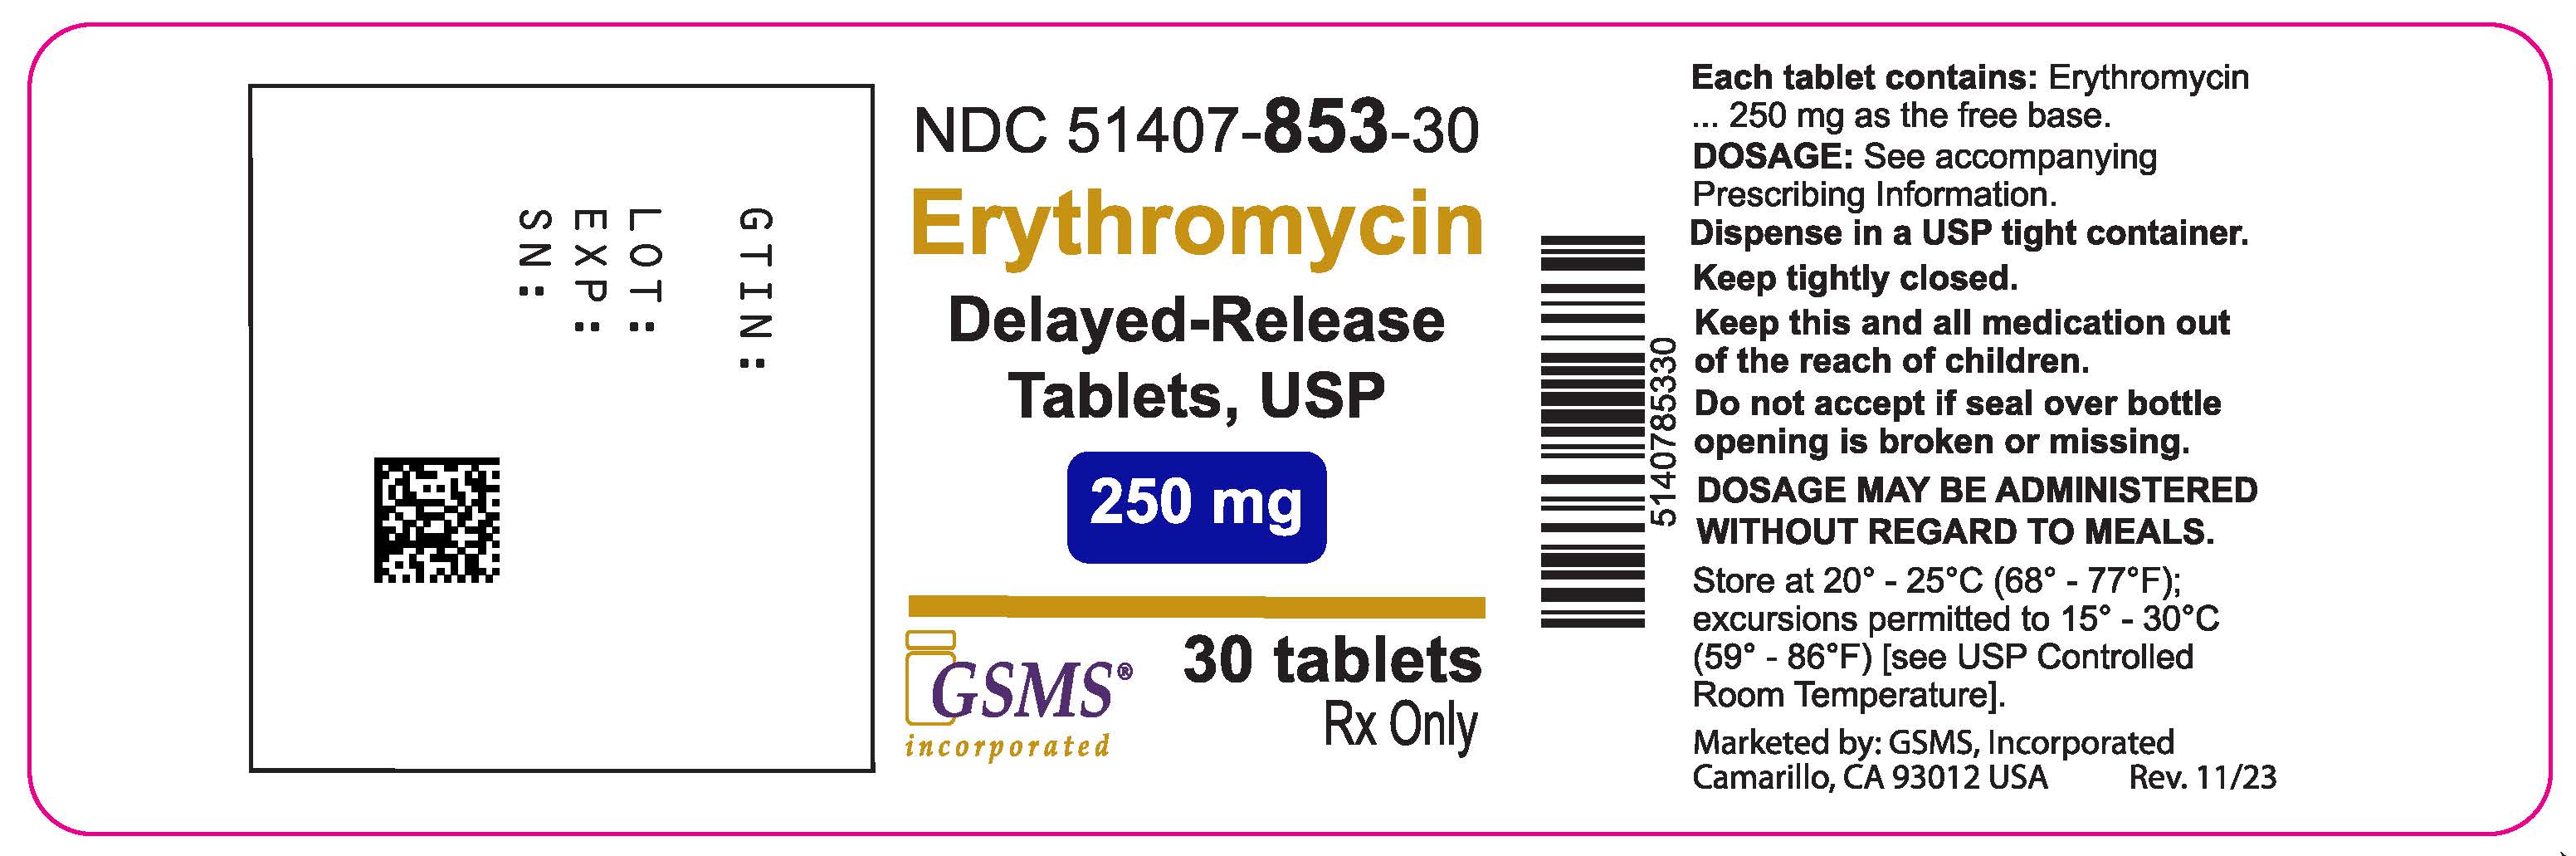 51407-853-30OL - Erythromycin DR Tablets - Rev. 1123.jpg